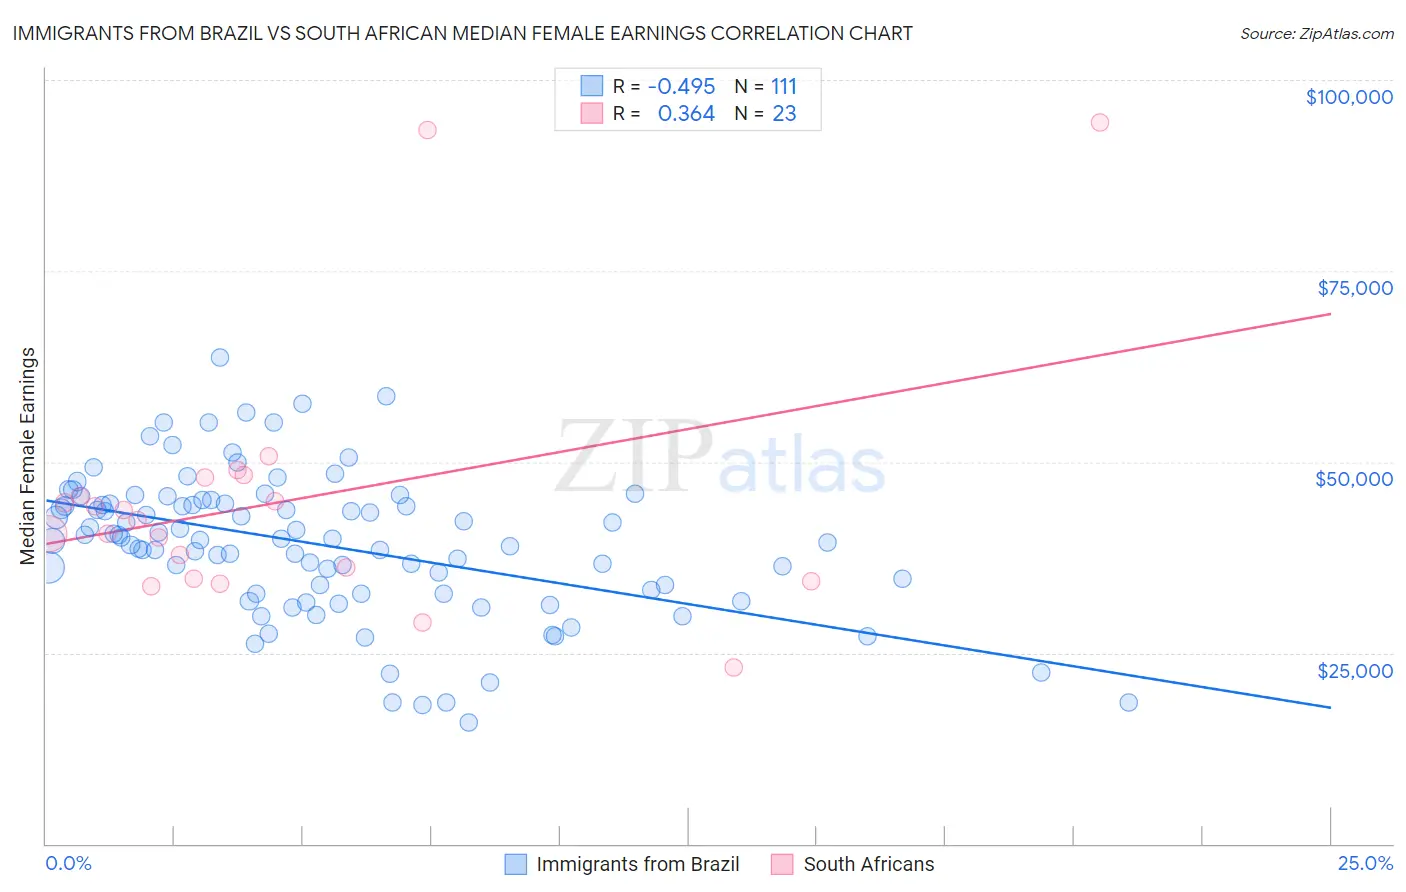 Immigrants from Brazil vs South African Median Female Earnings